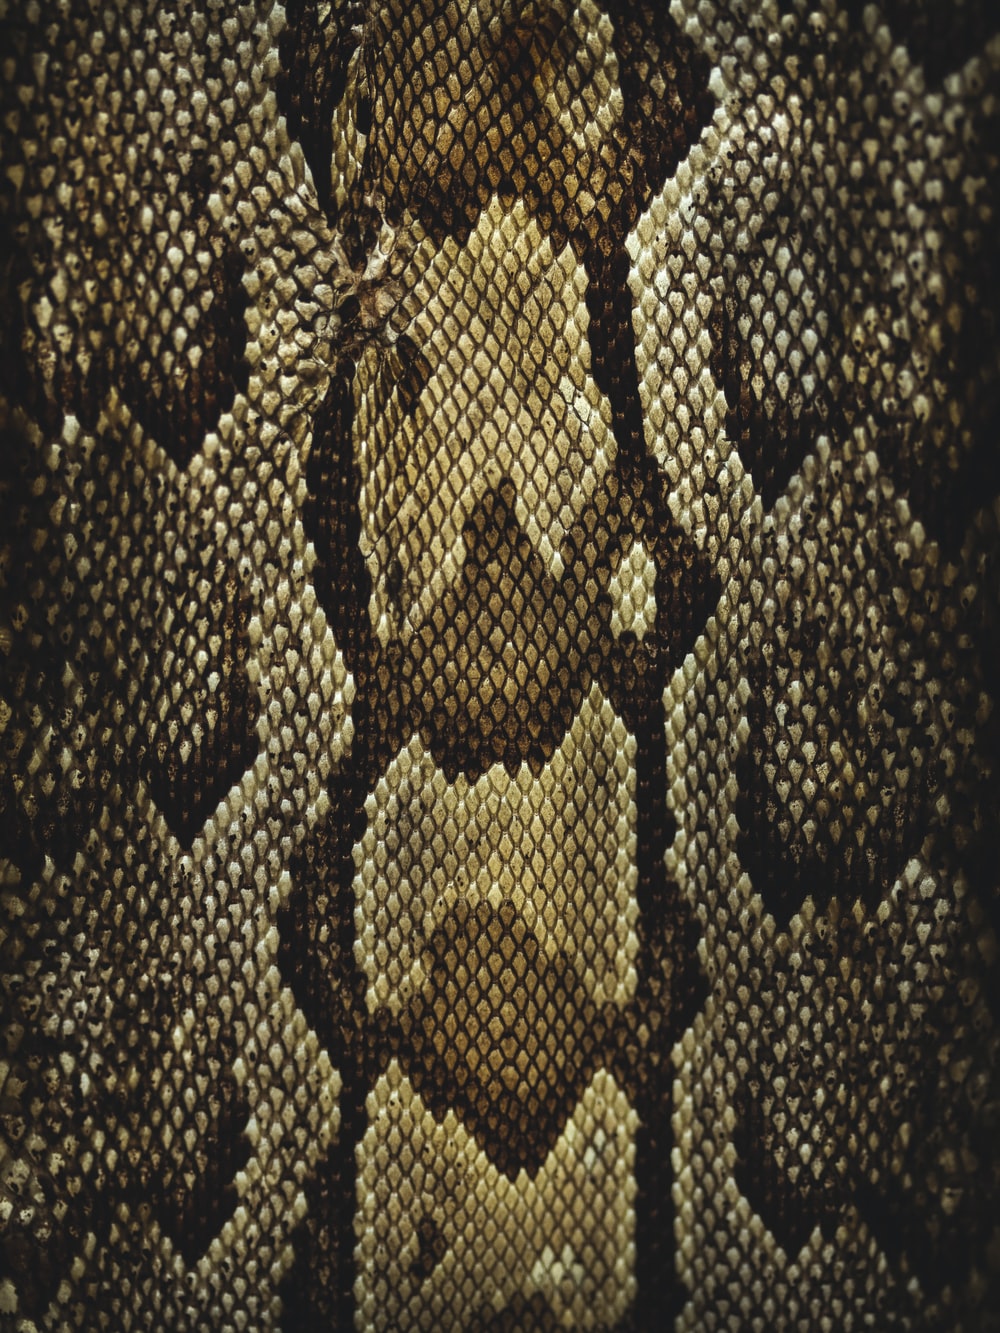 Snake Skin Picture. Download Free Image